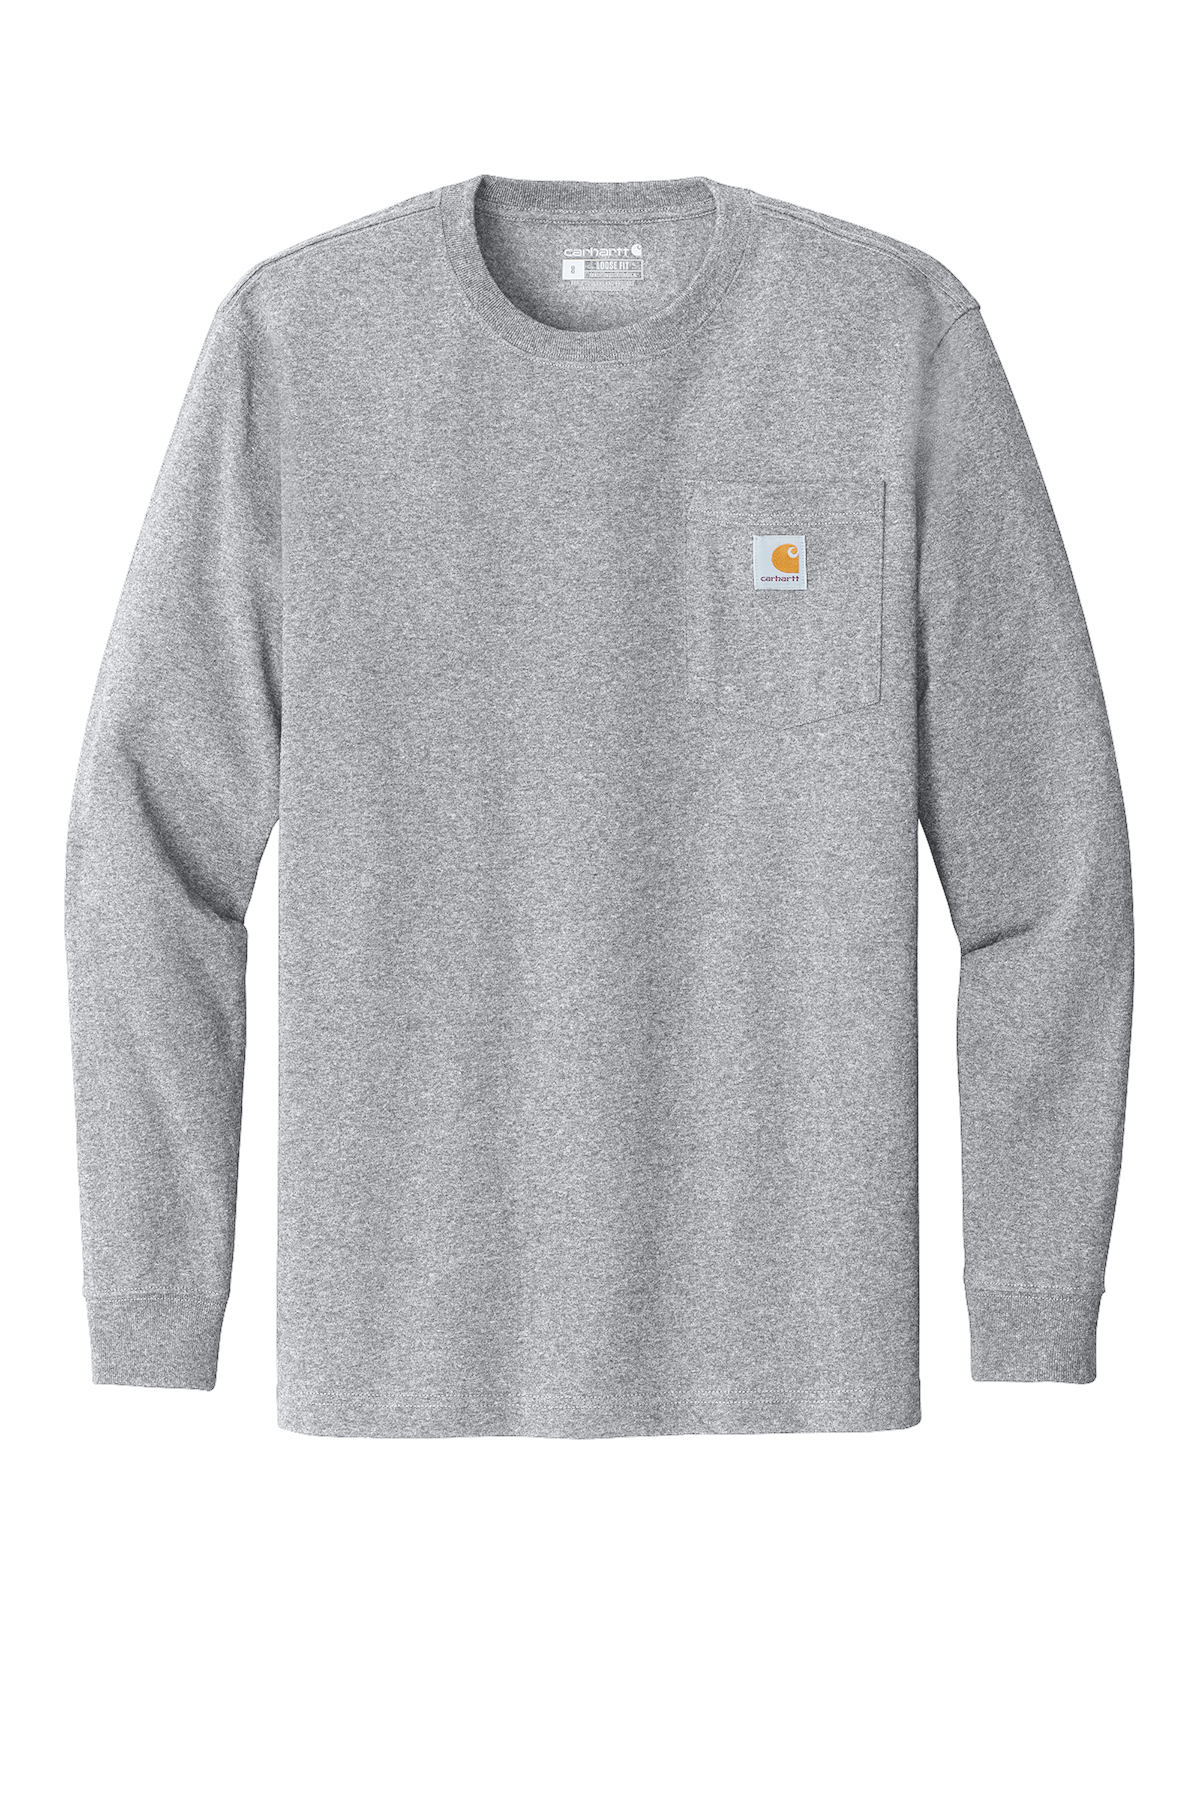 Carhartt Workwear Pocket Long Sleeve T-Shirt, Product